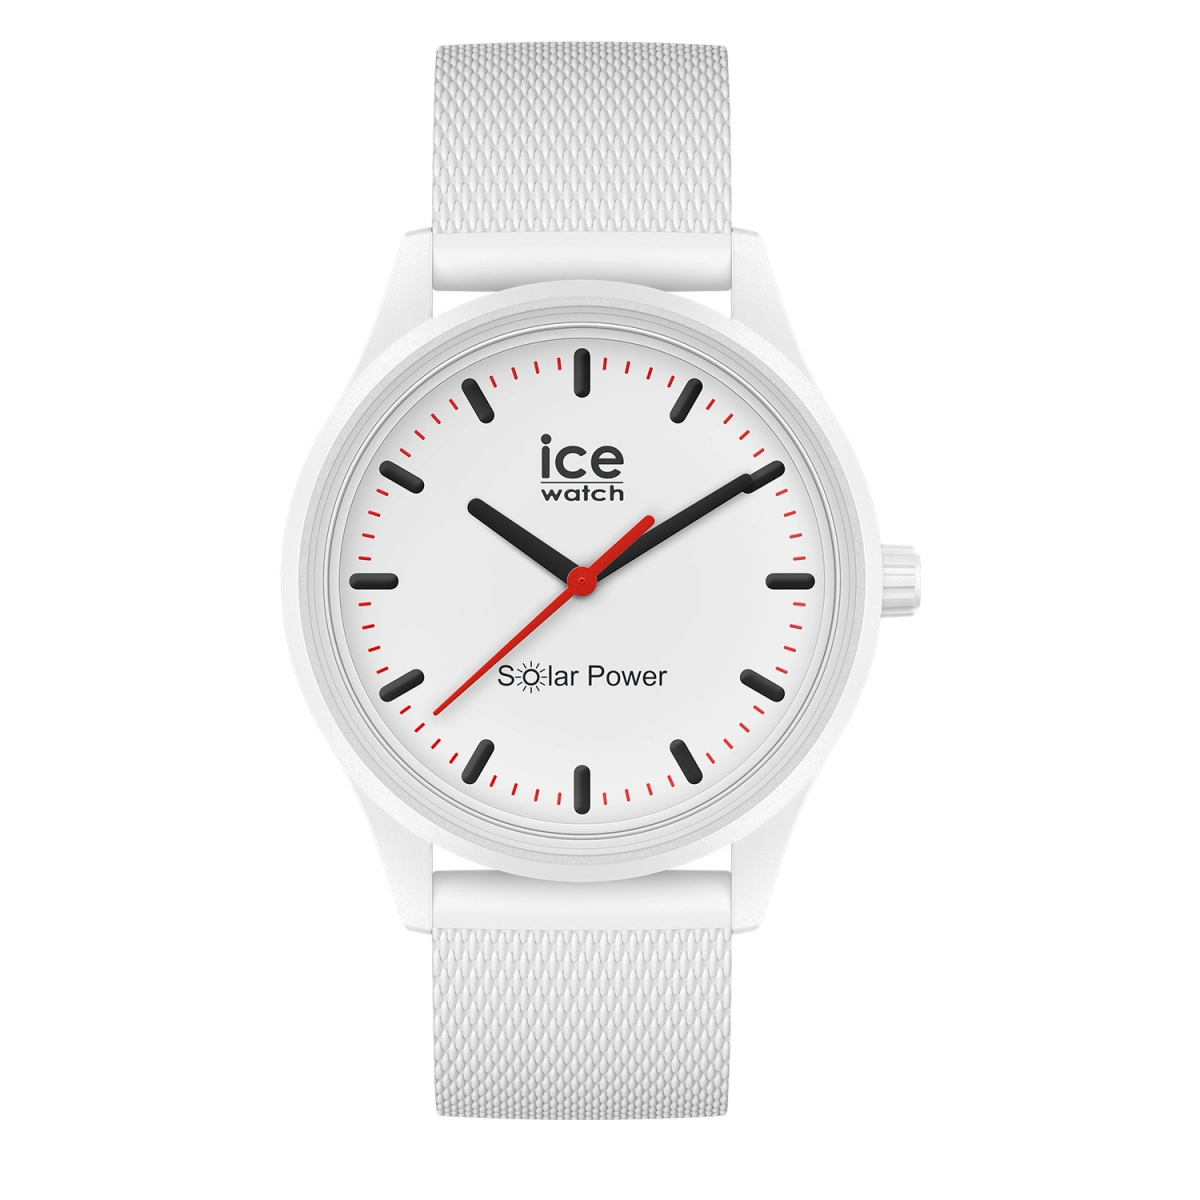 RELOJ ANALOGICO DE UNISEX ICE IW018390 Ice watch